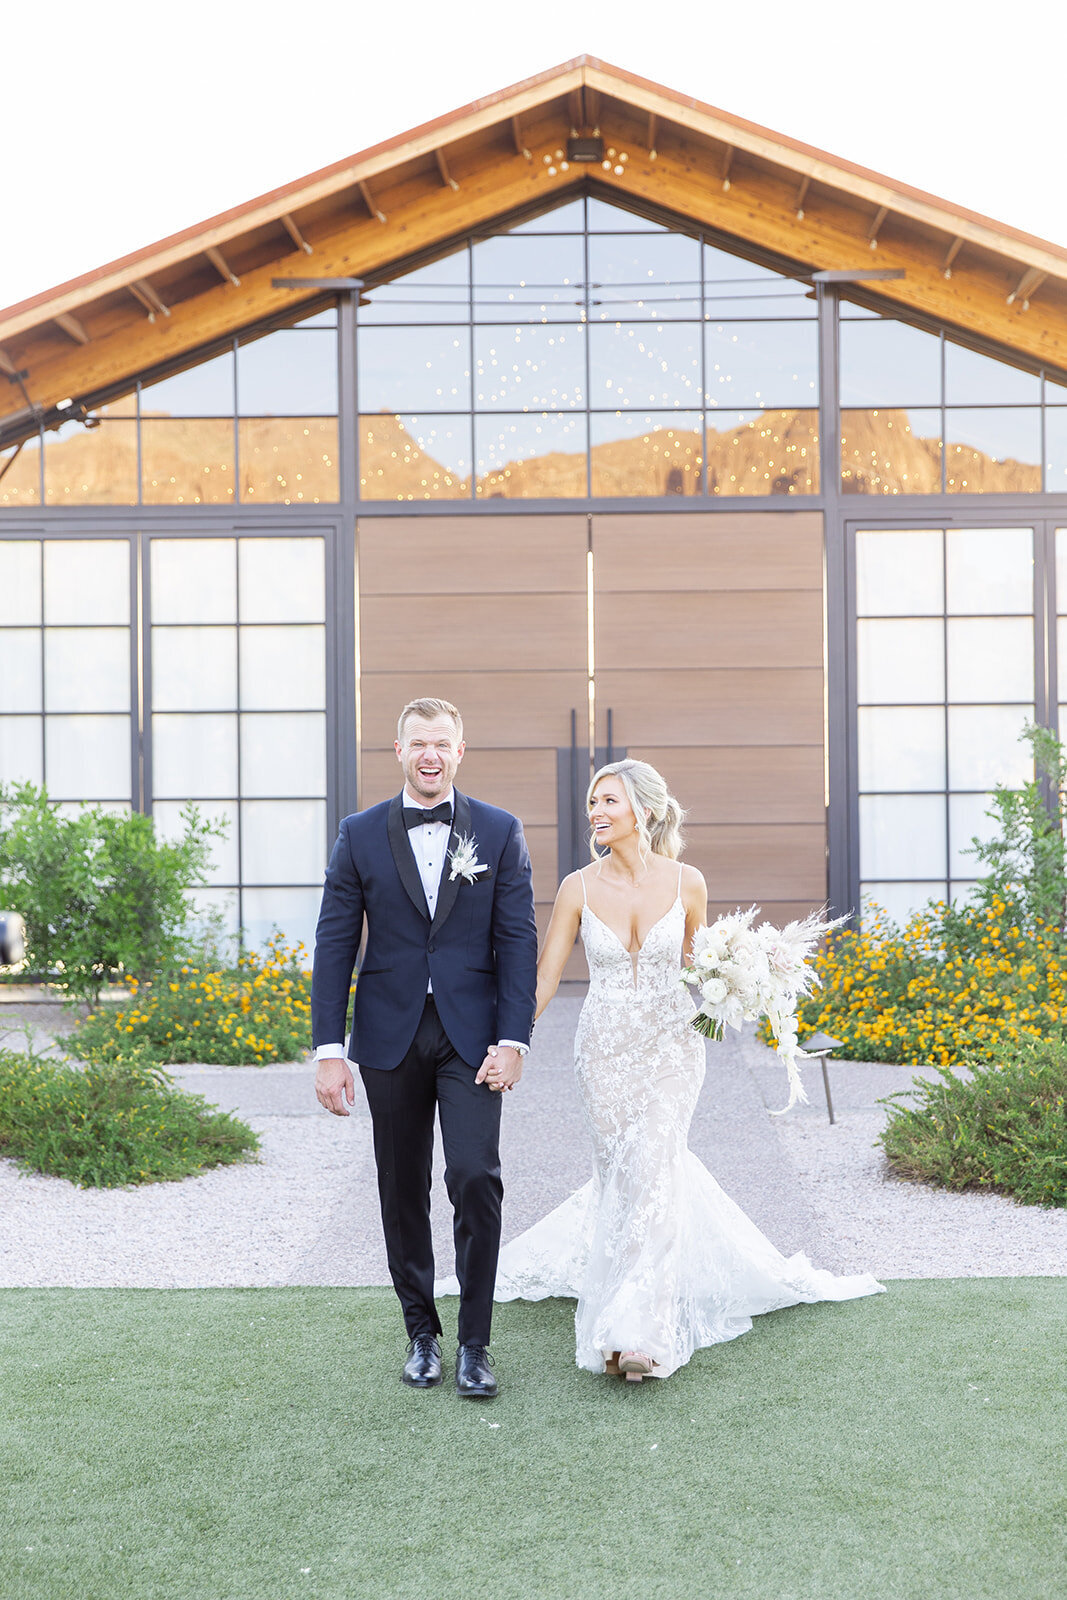 Karlie Colleen Photography - Ashley & Grant Wedding - The Paseo - Phoenix Arizona-717